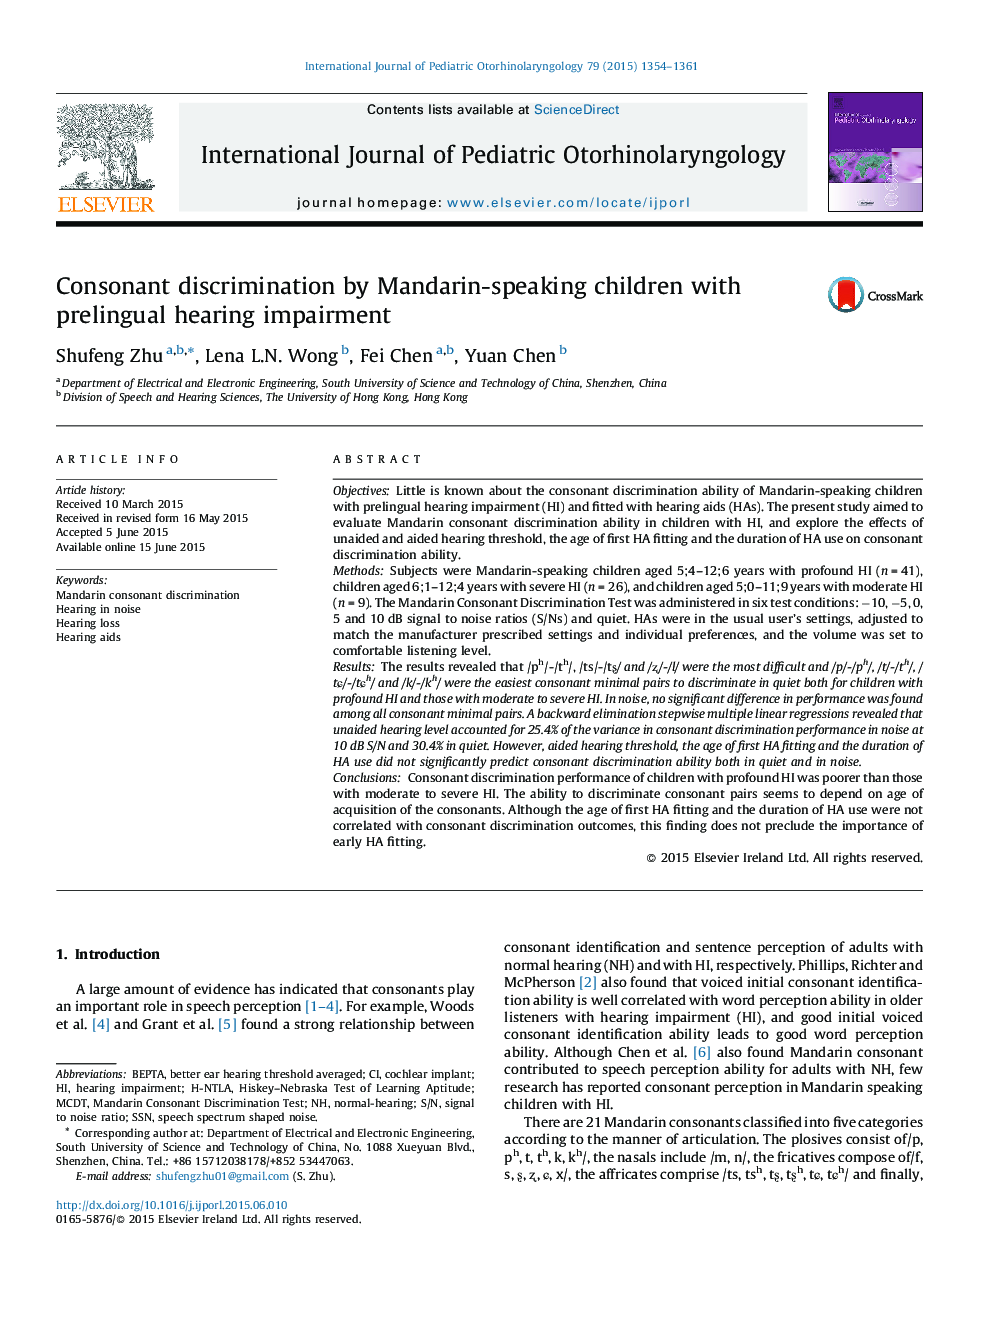 Consonant discrimination by Mandarin-speaking children with prelingual hearing impairment